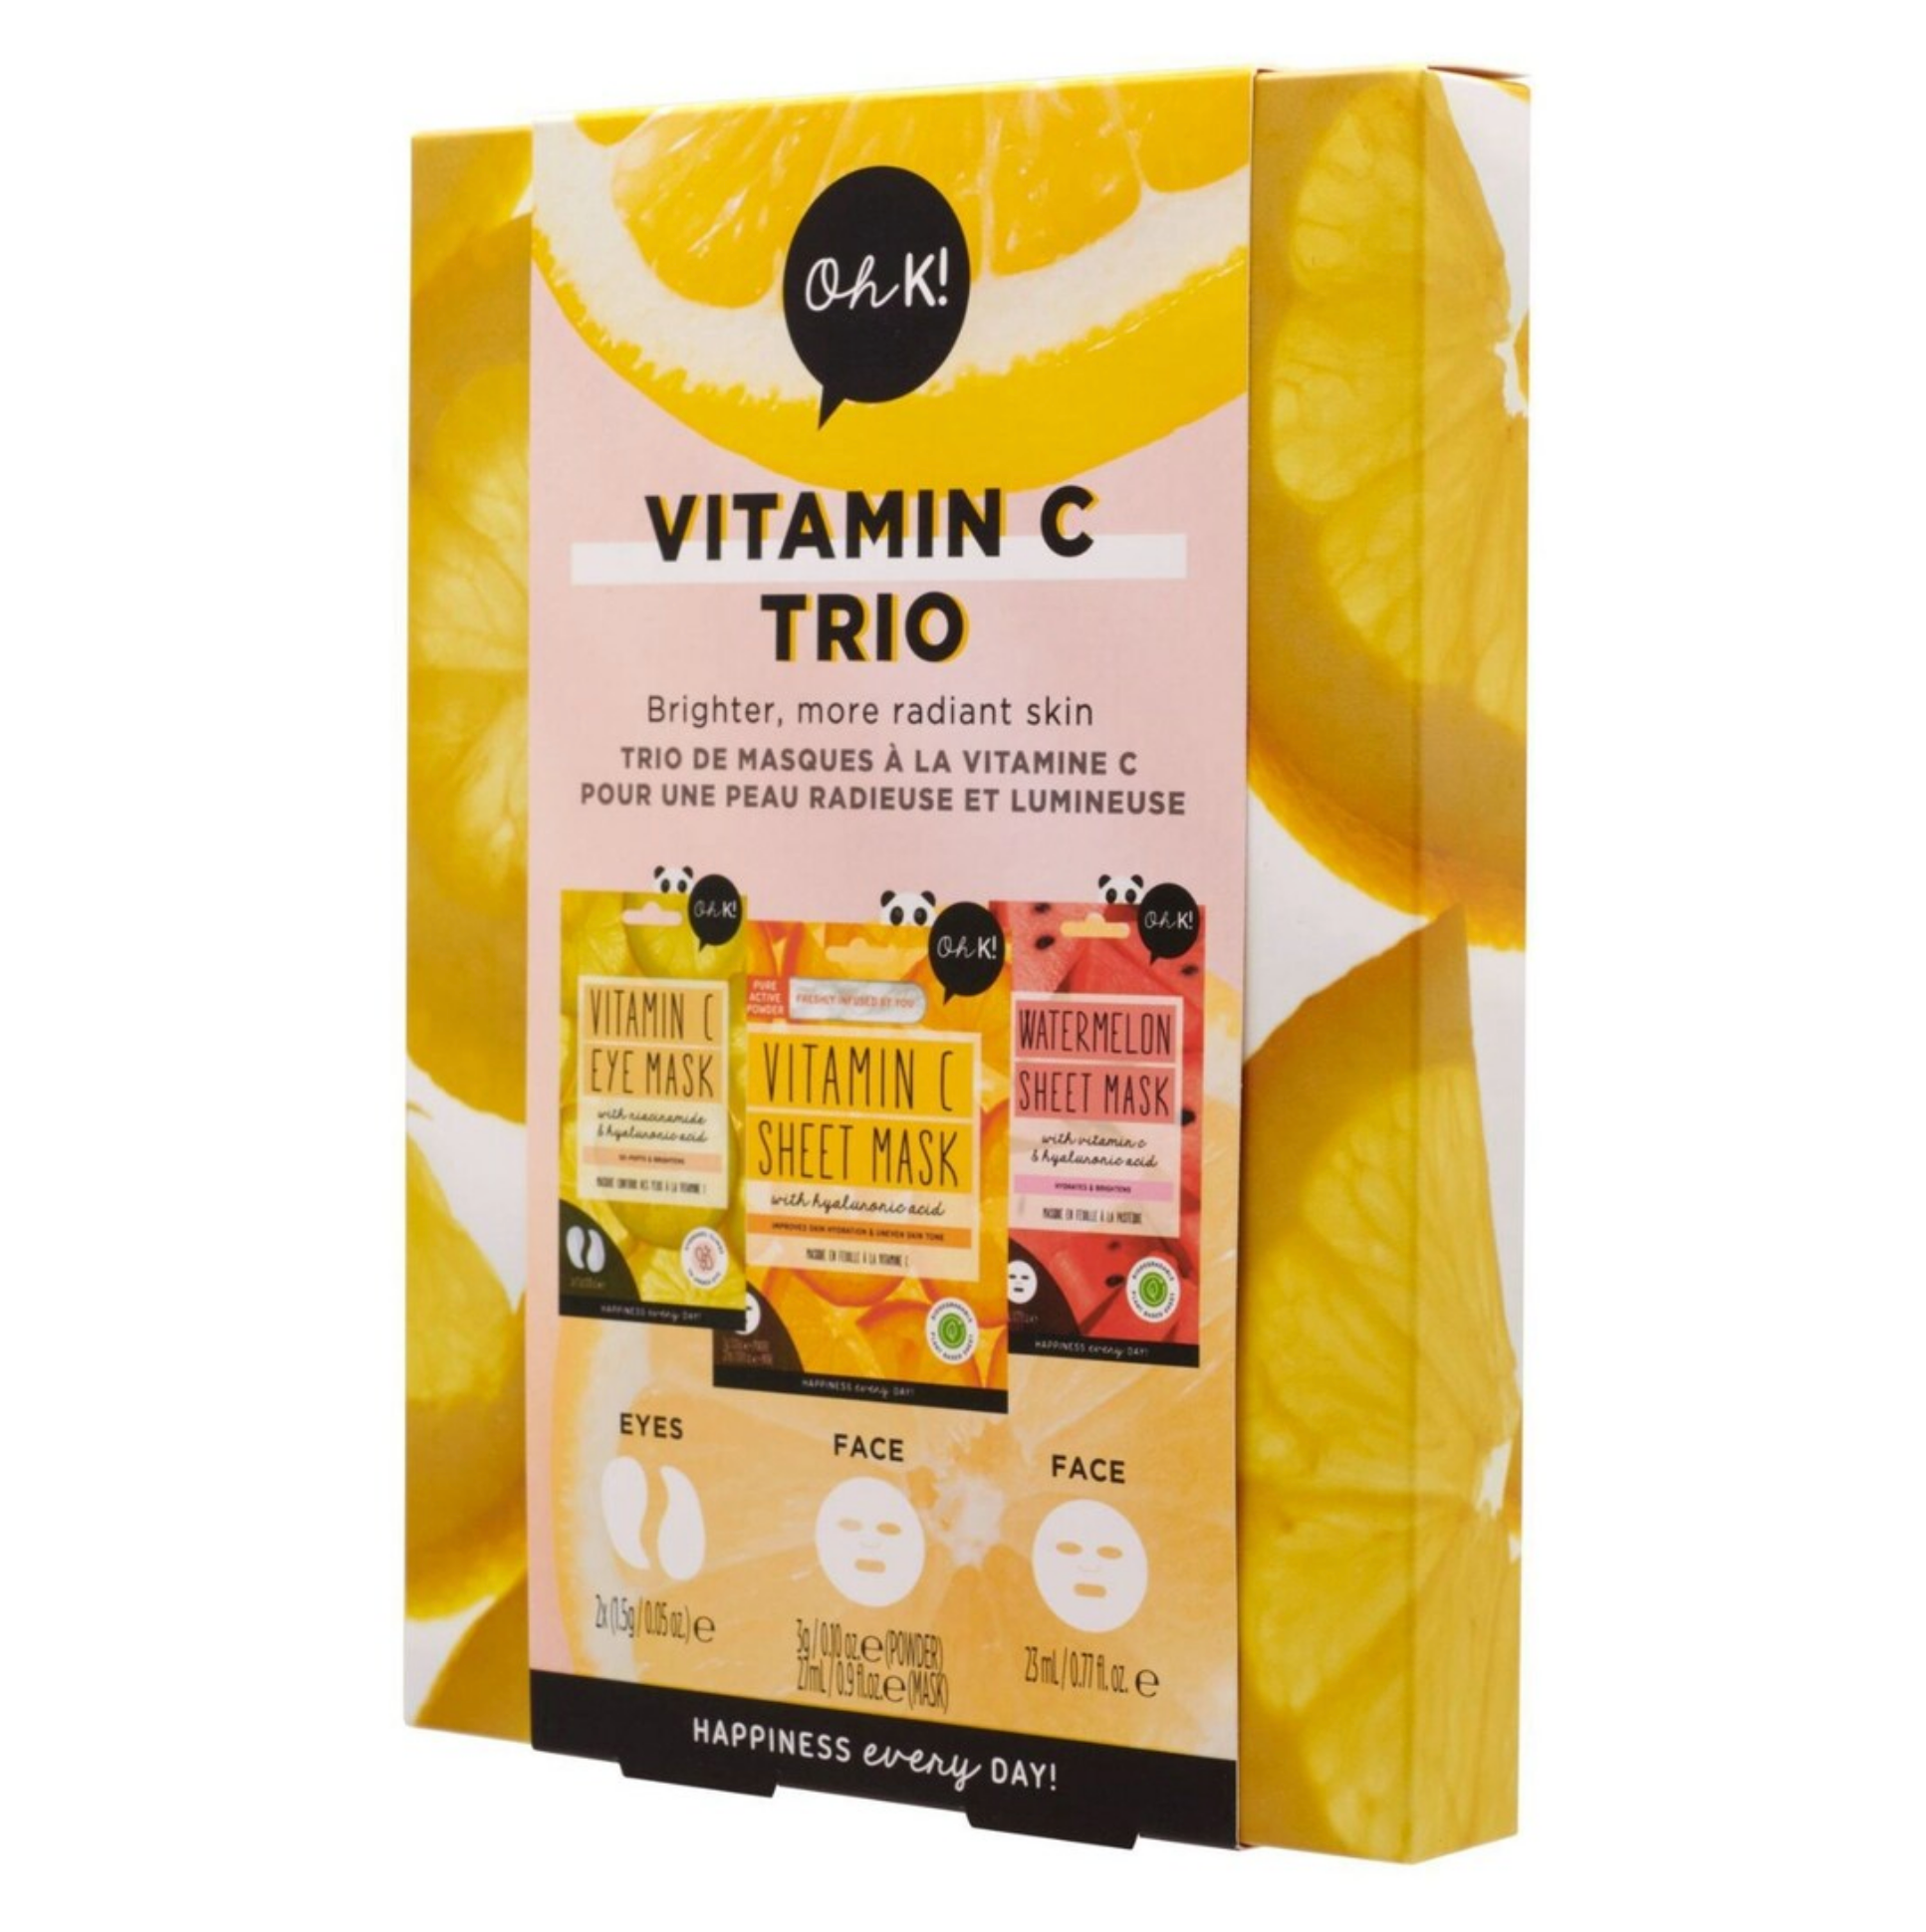 Oh K! Vitamin C Trio Set, side view